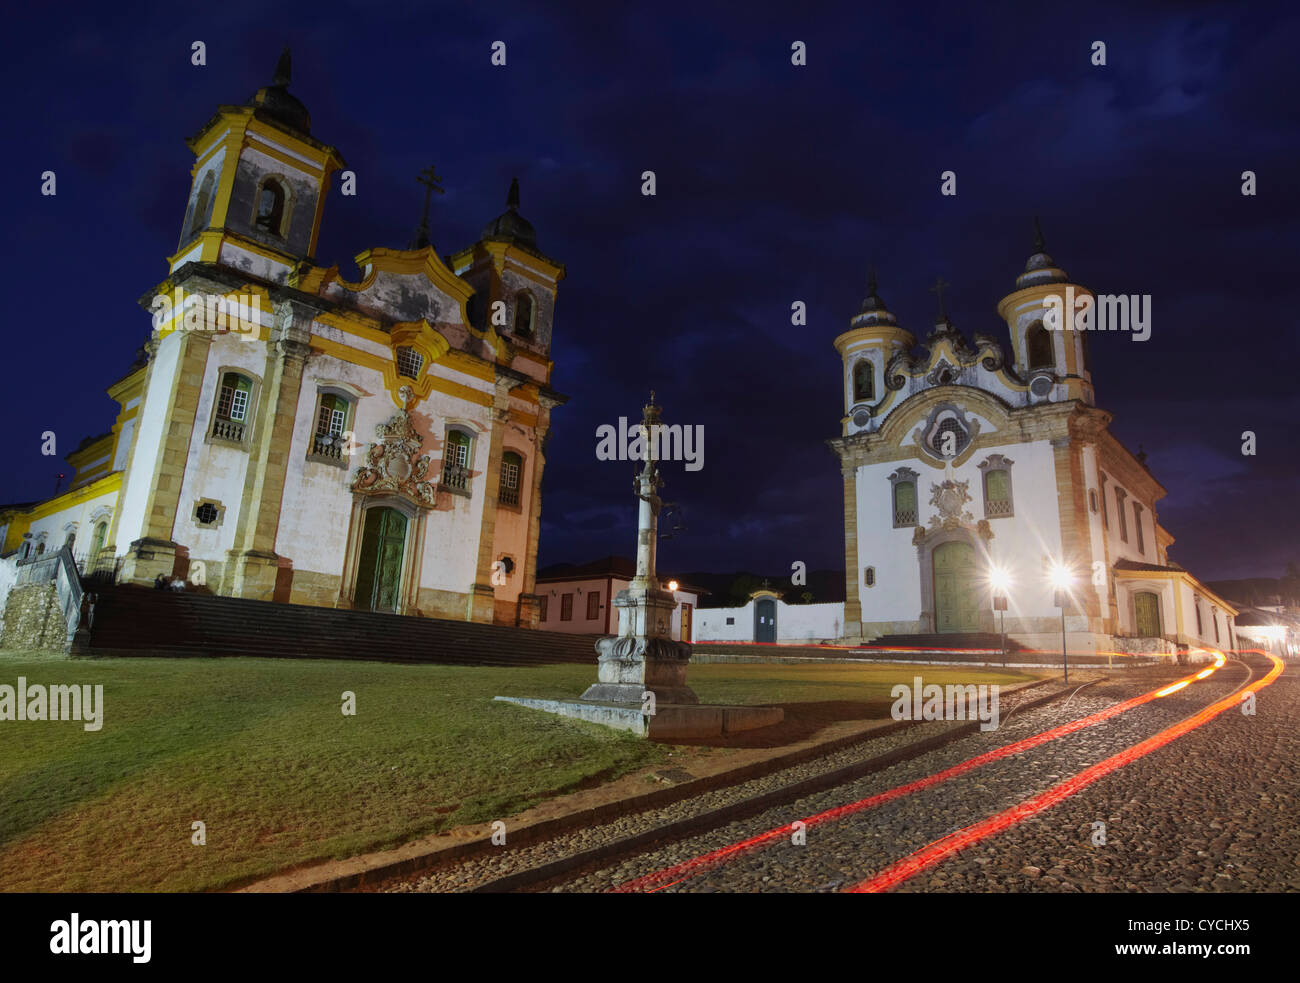 Our Lady of Carmo and Sao Francisco of Assis churches in Praca Minas Gerais at dusk, Mariana, Minas Gerais, Brazil Stock Photo